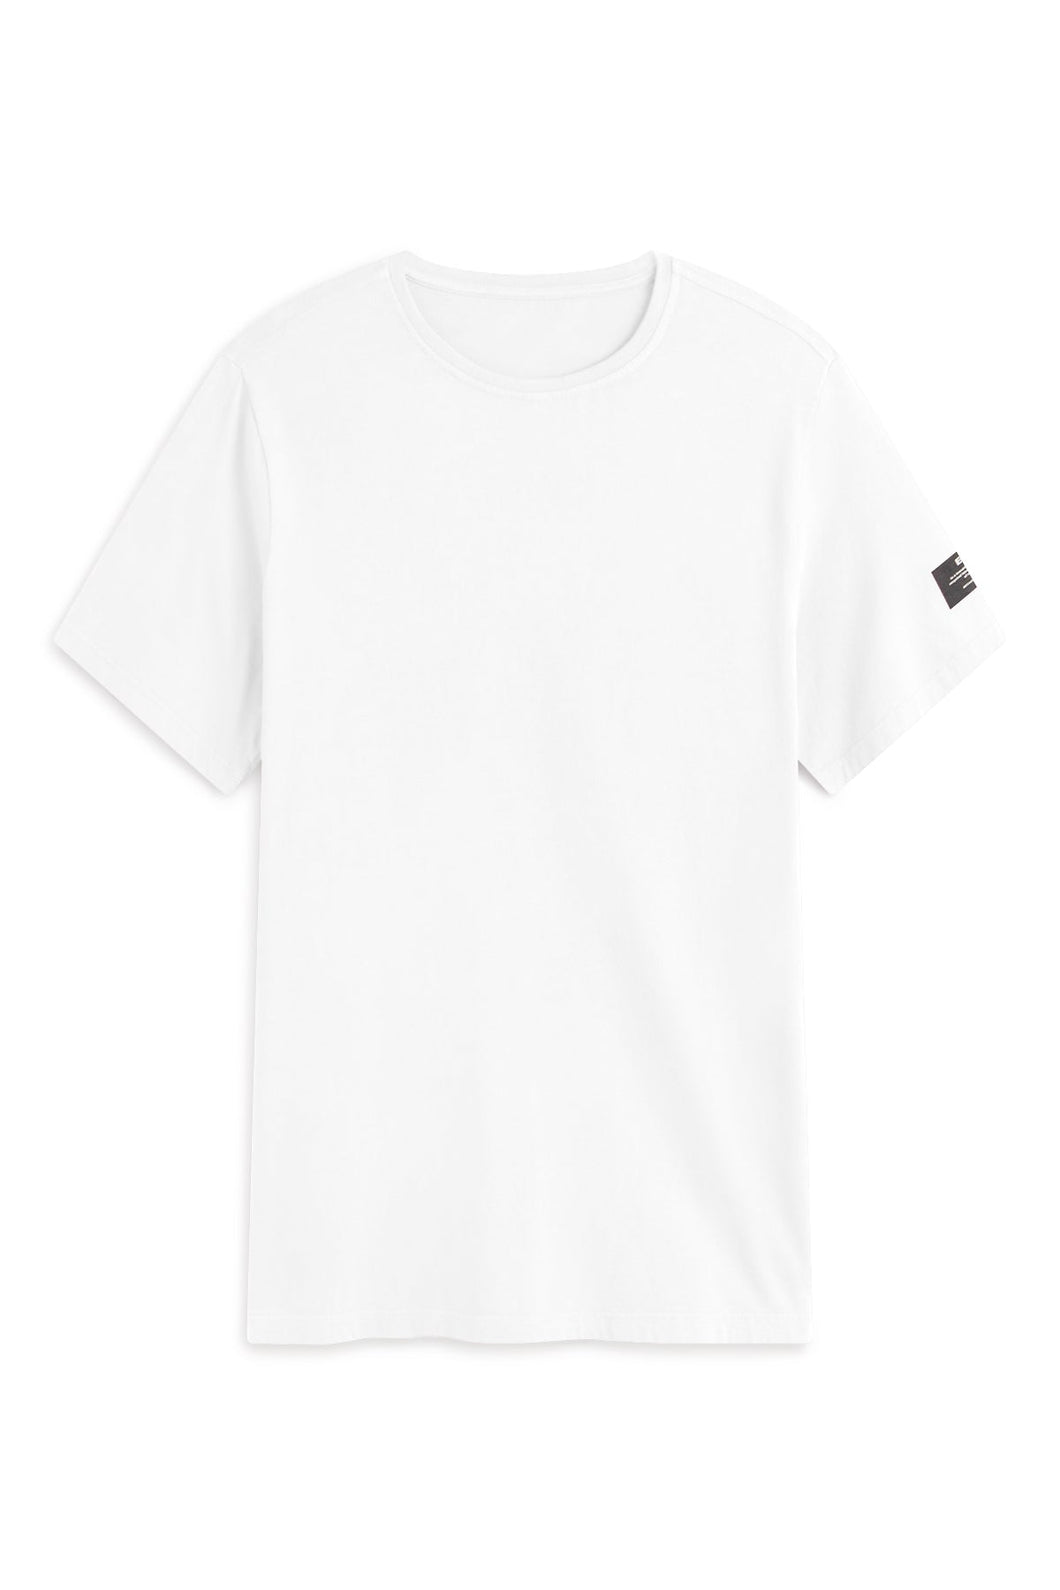 ECOALF T-shirt lavata uomo